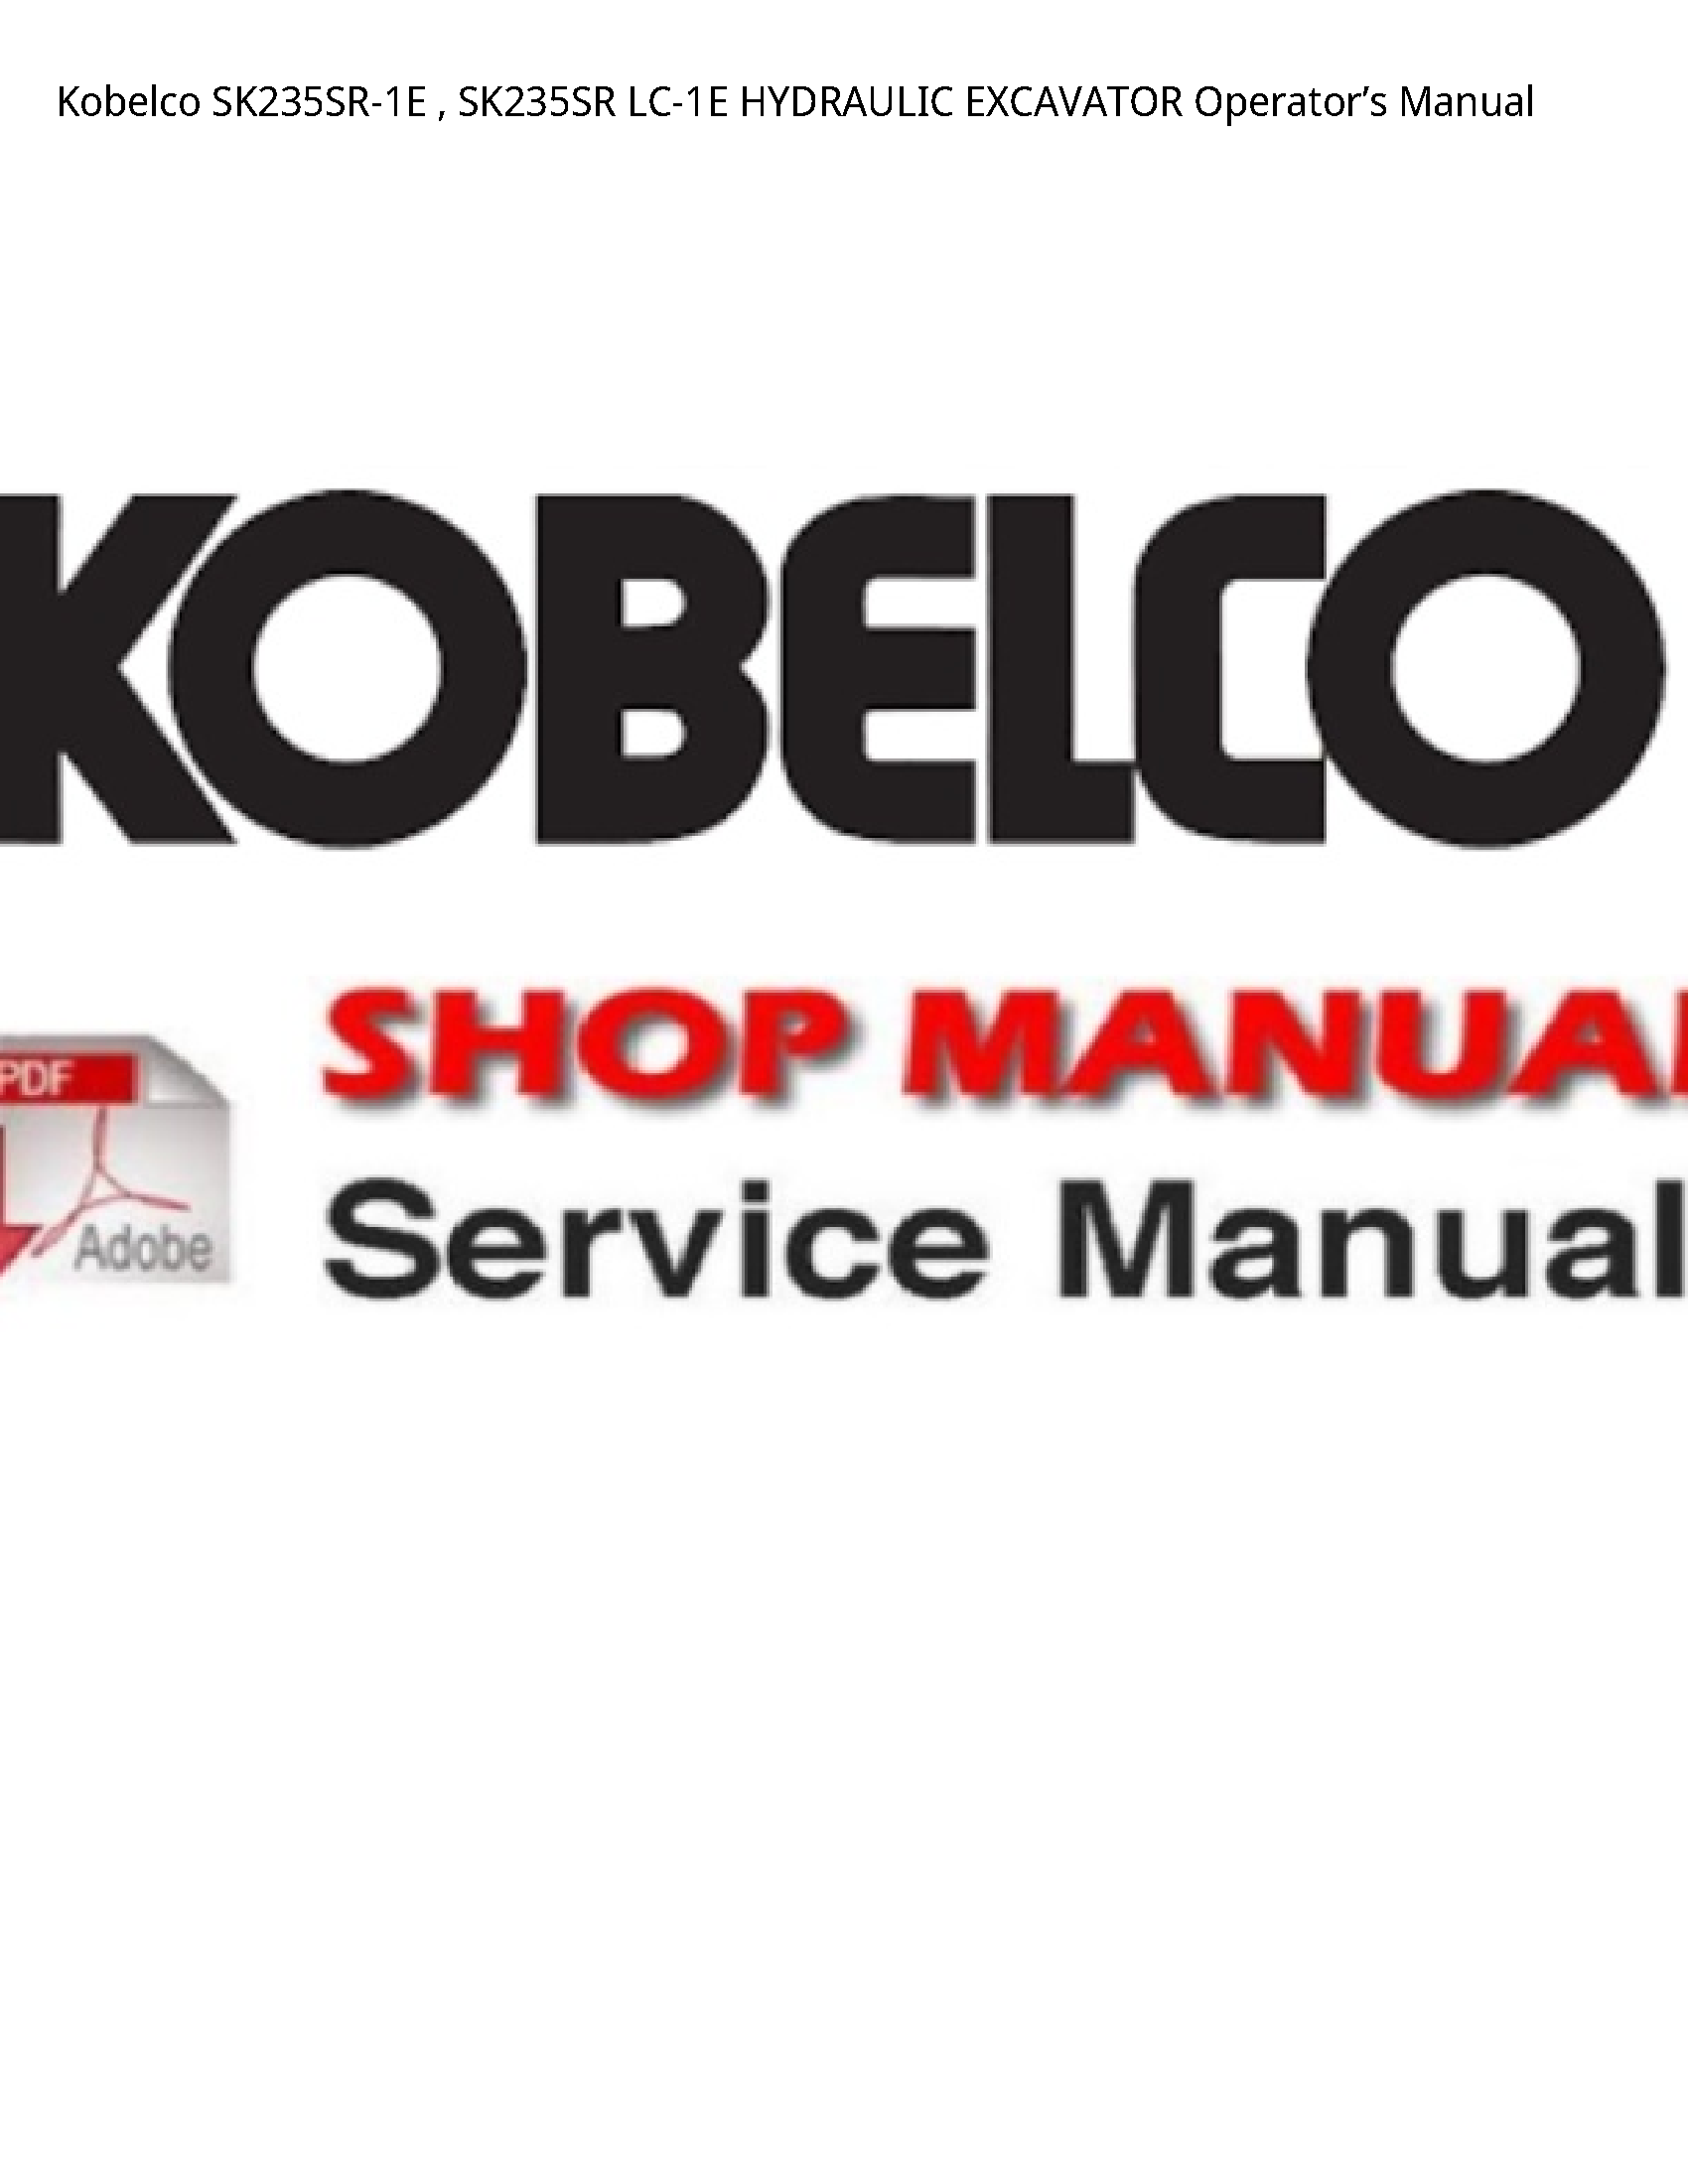 Kobelco SK235SR-1E HYDRAULIC EXCAVATOR Operator’s manual